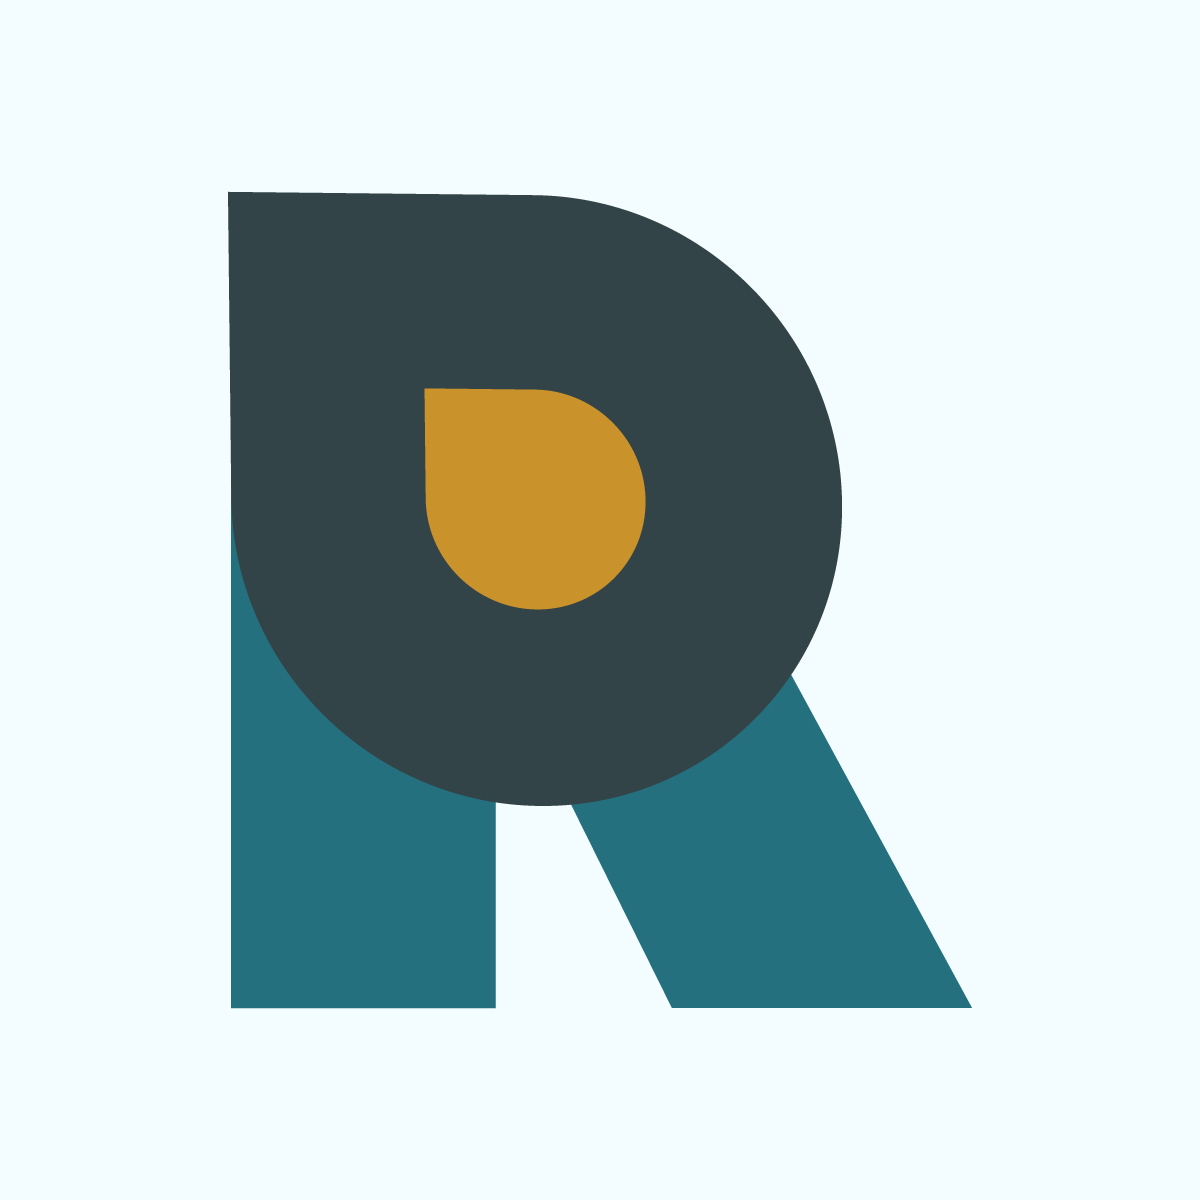 Reb Dev & Design